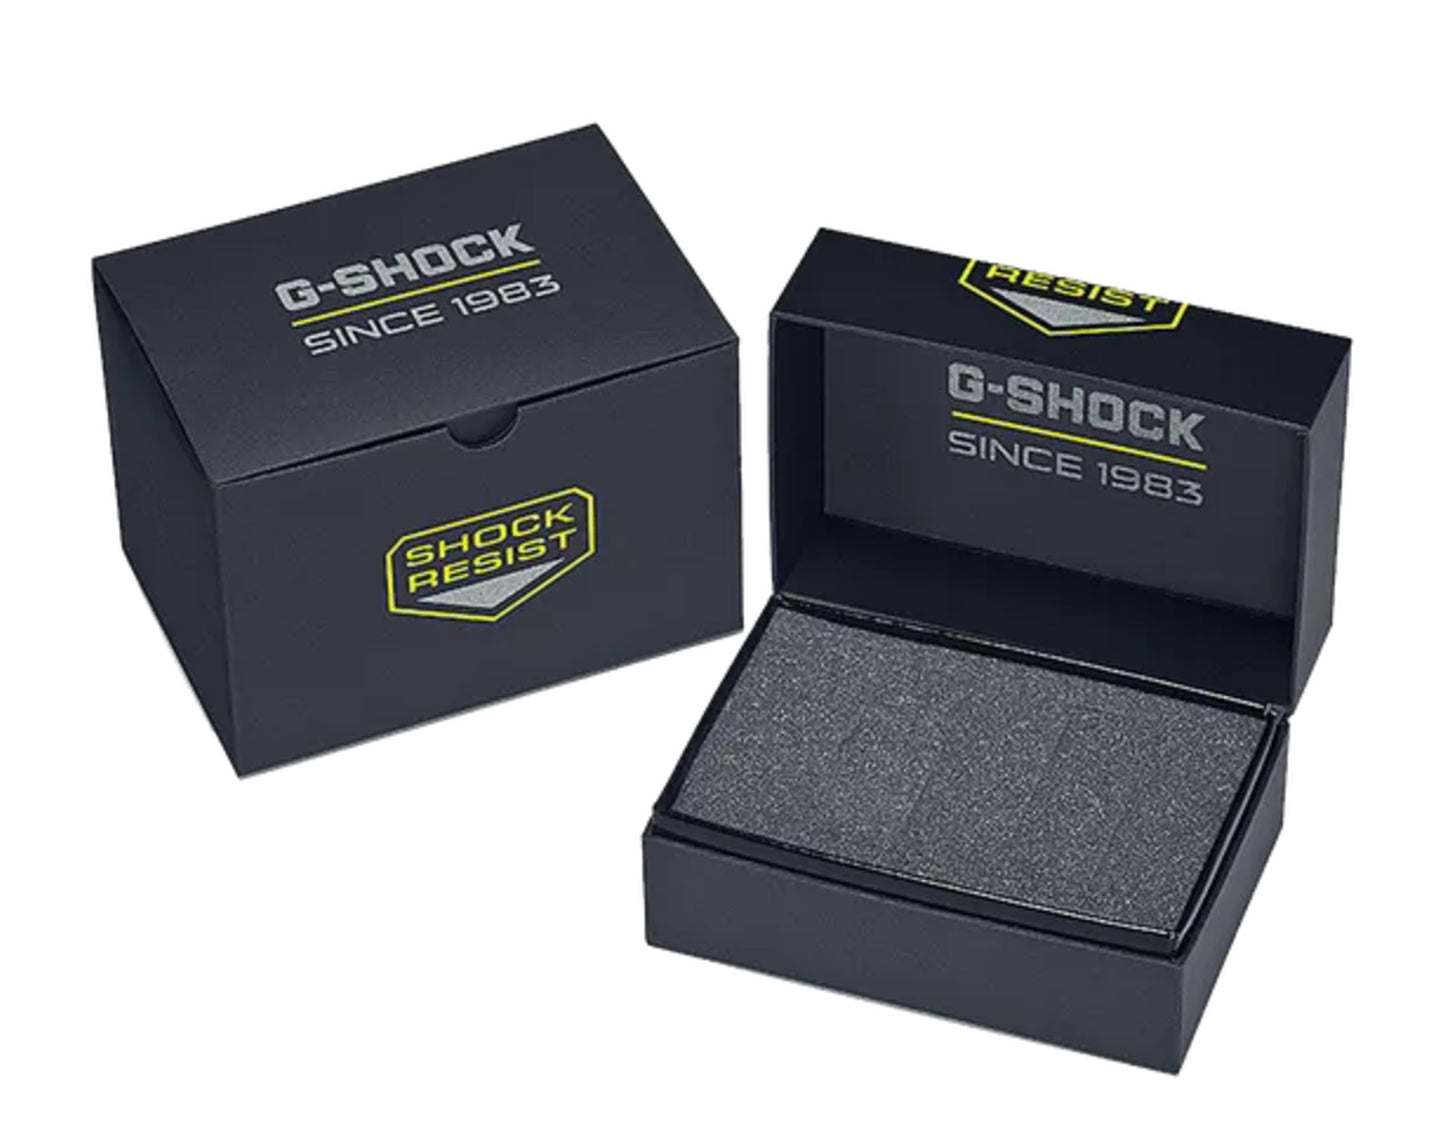 Casio G-Shock GA900E Analog-Digital Resin-Cloth Watch